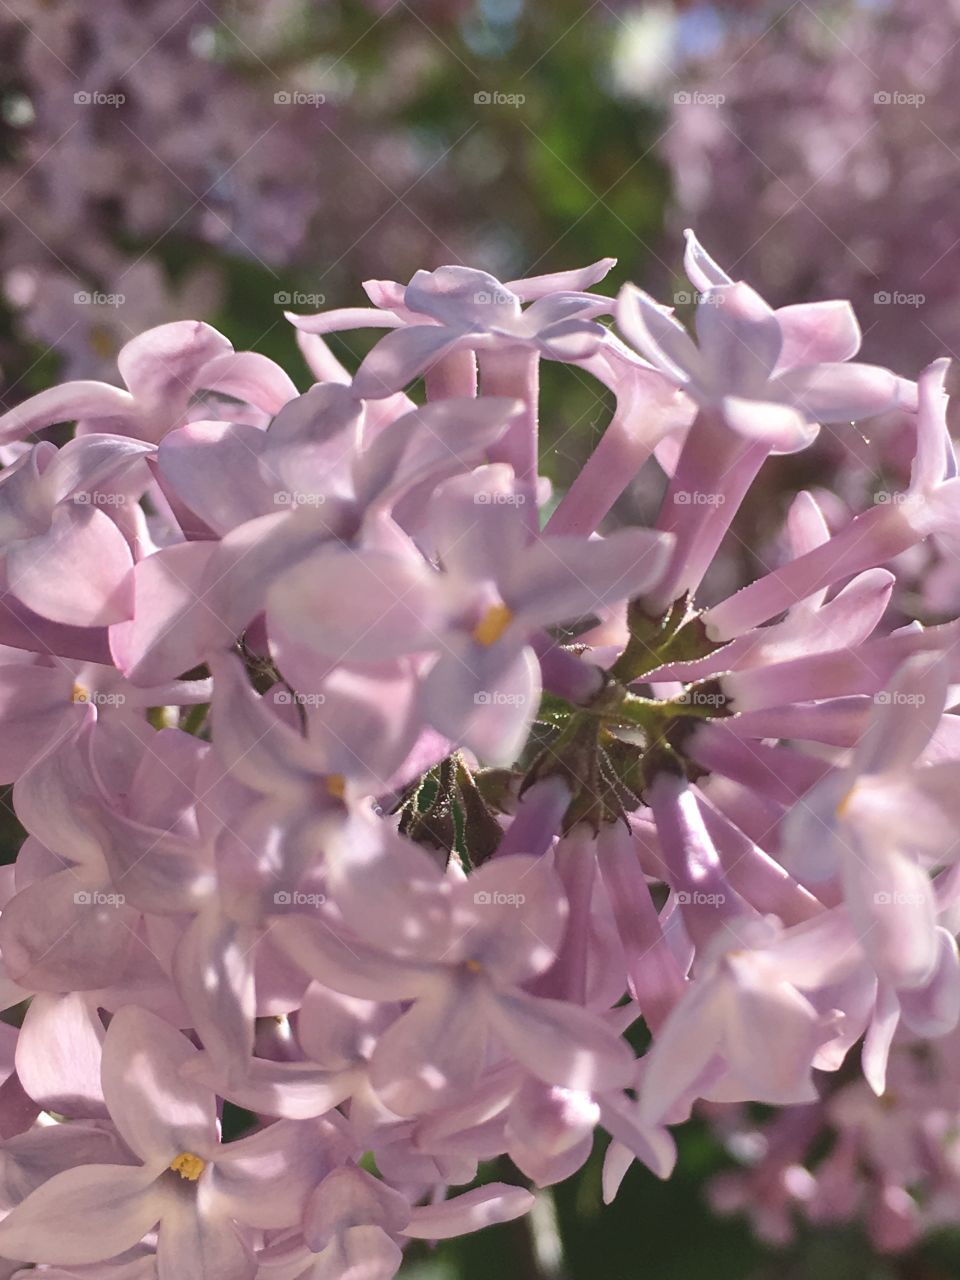 Tree blooming lilacs 